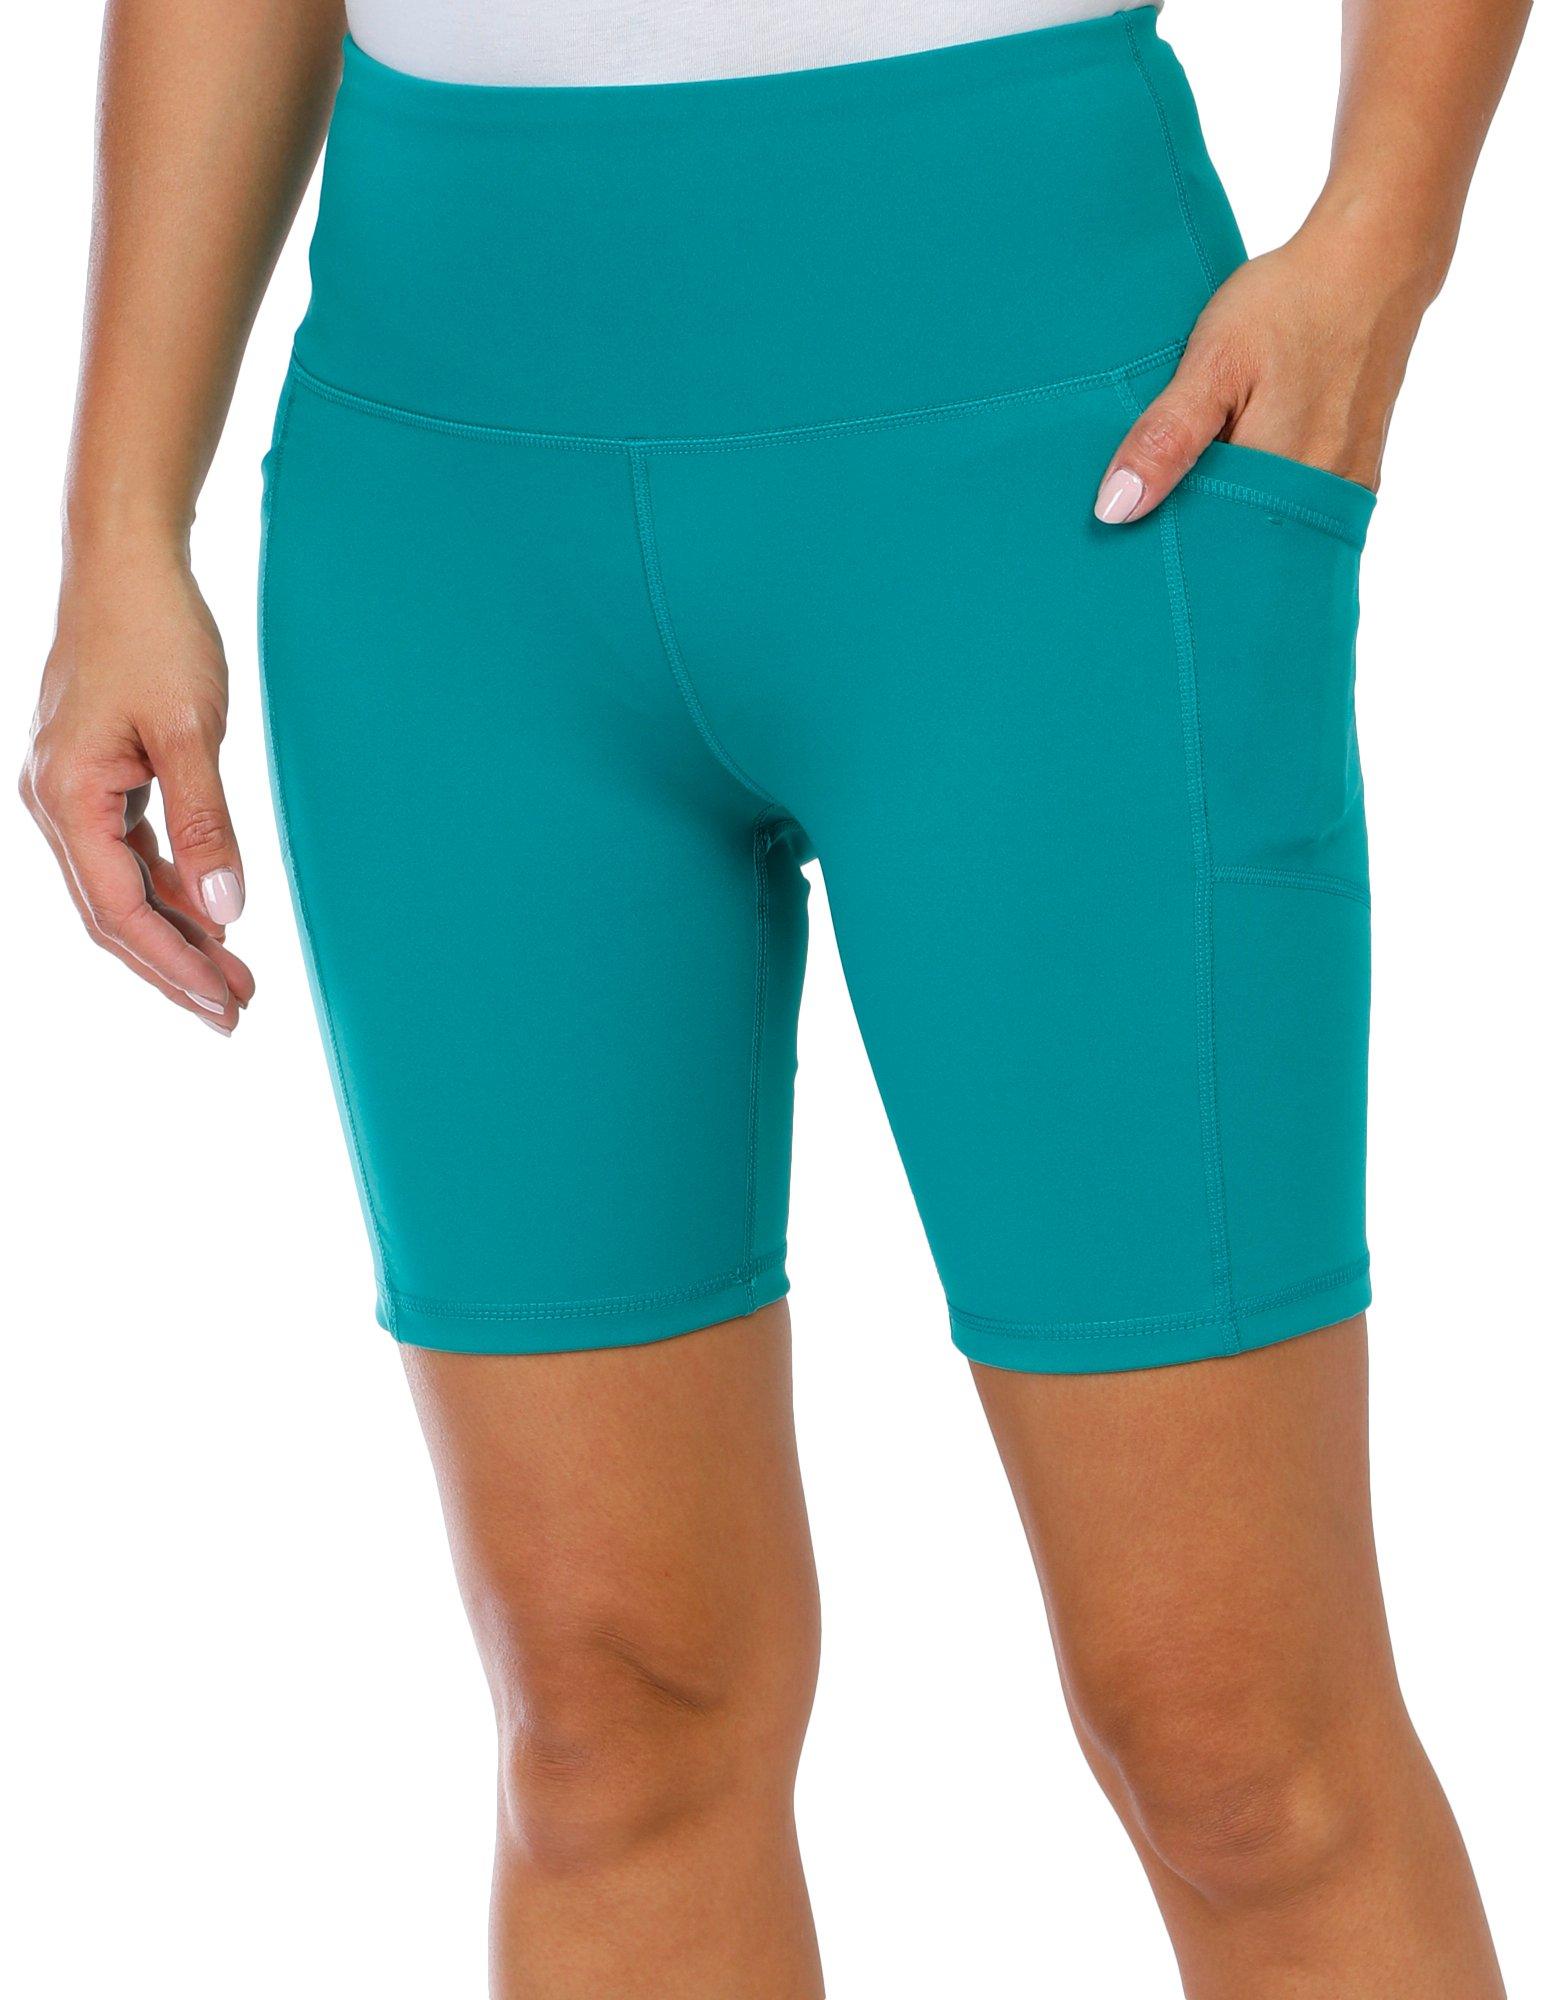 Women's Active Solid Bike Shorts